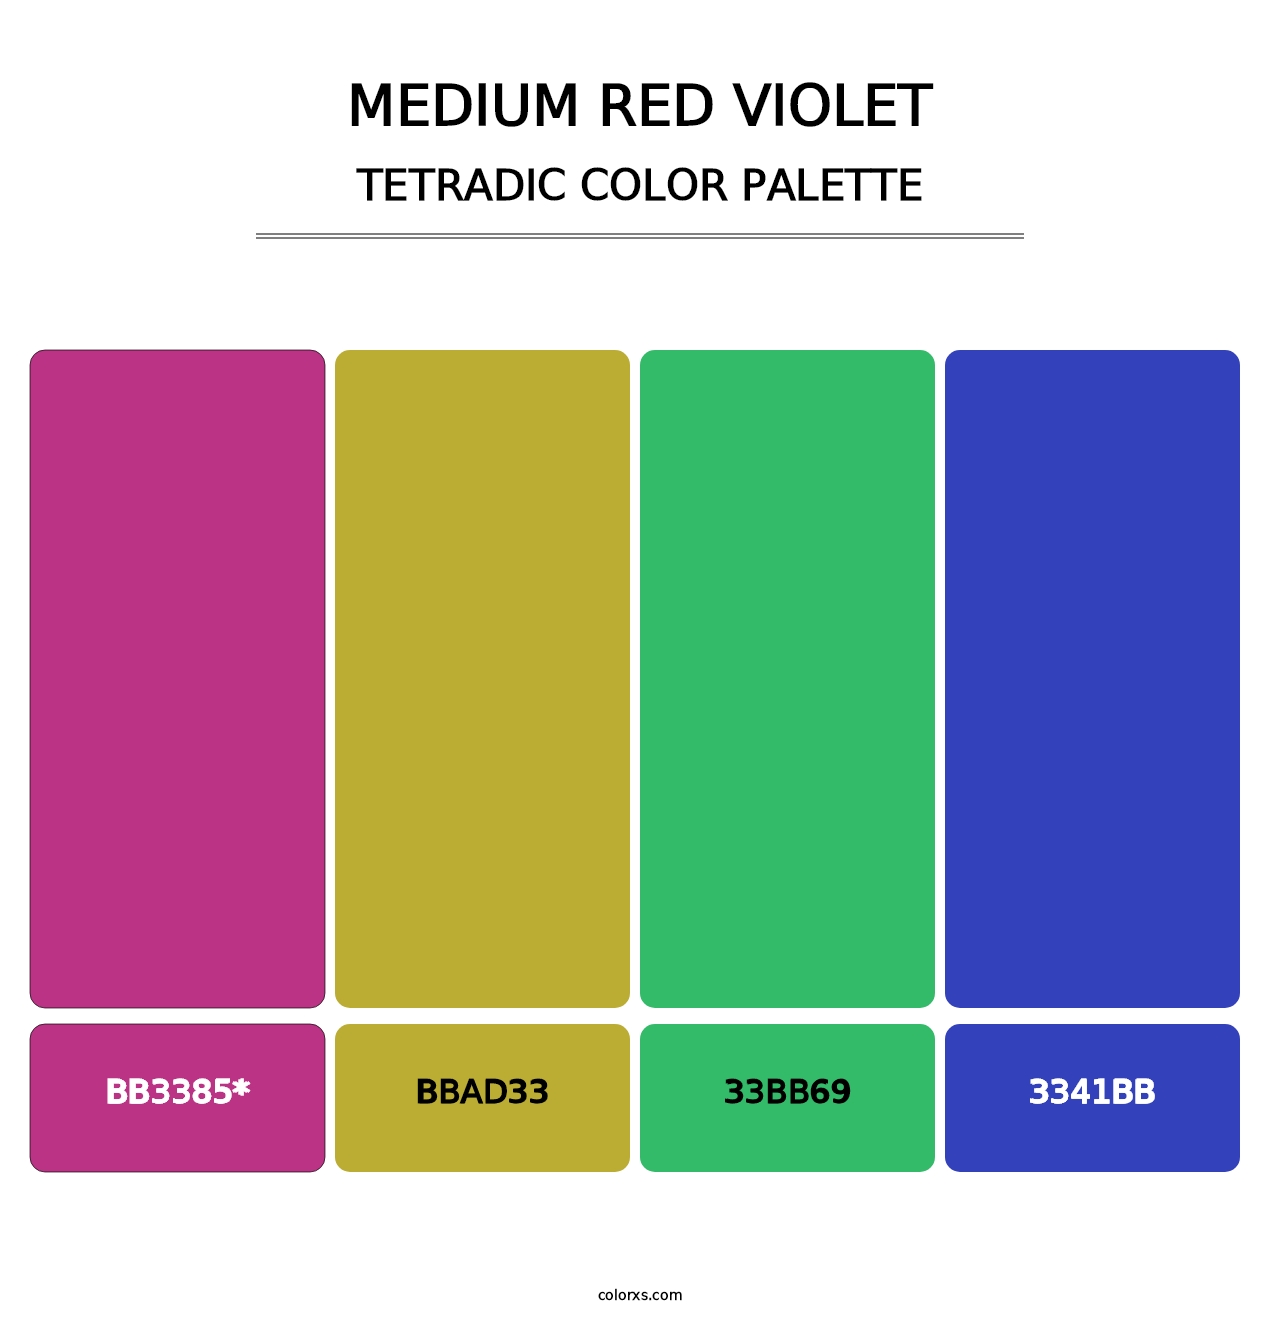 Medium Red Violet - Tetradic Color Palette